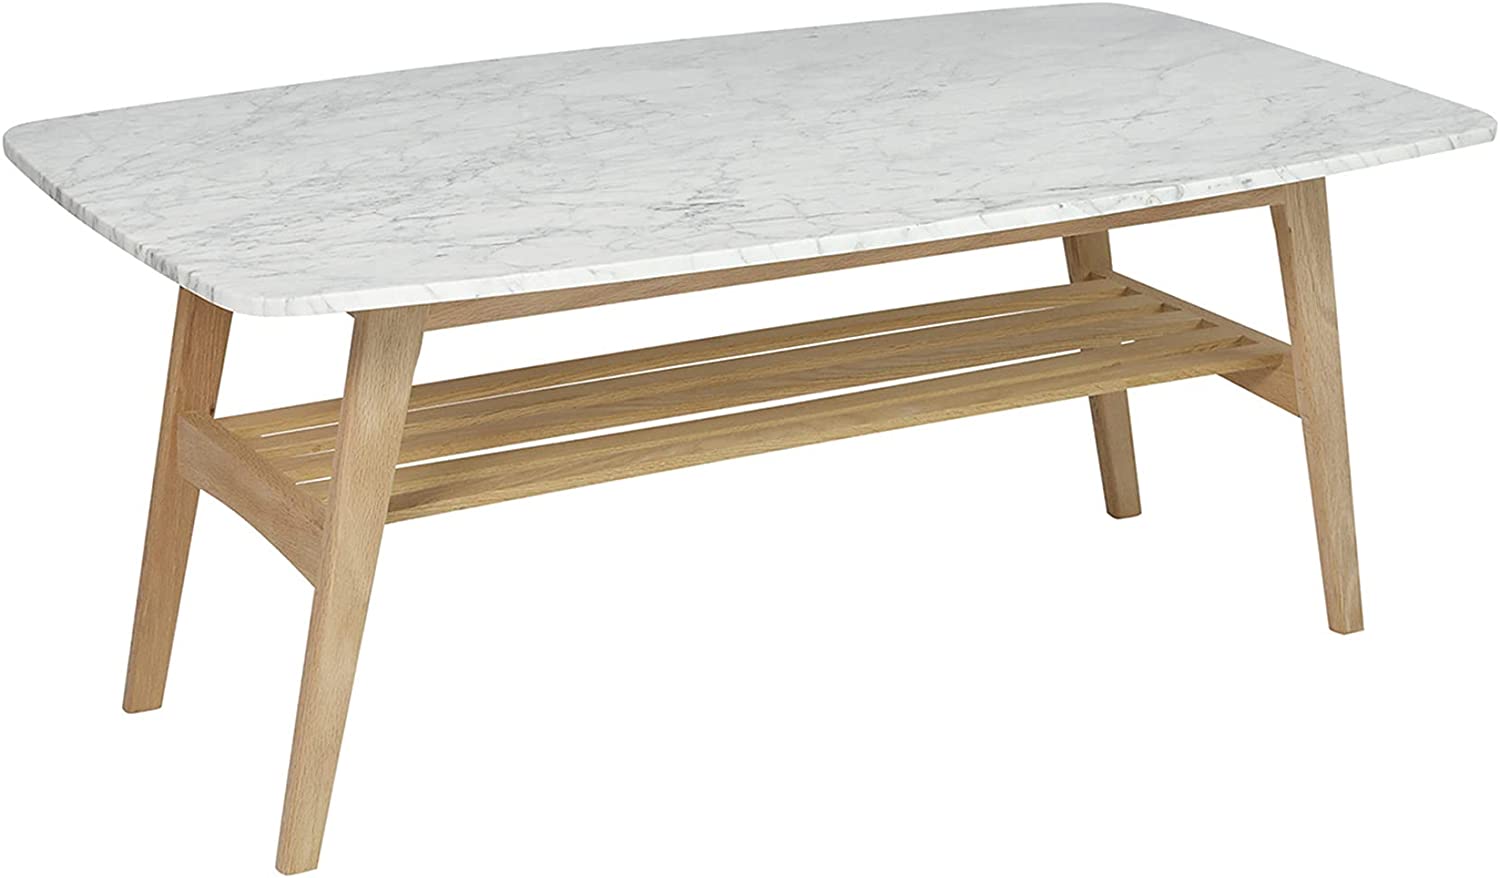 Bianco Modern Decorative Laura Italian Carrara White Marble Coffee Table with Oak Shelf for Living Room, Bedroom &amp; Dining Room - 43&#34;, Rectangular